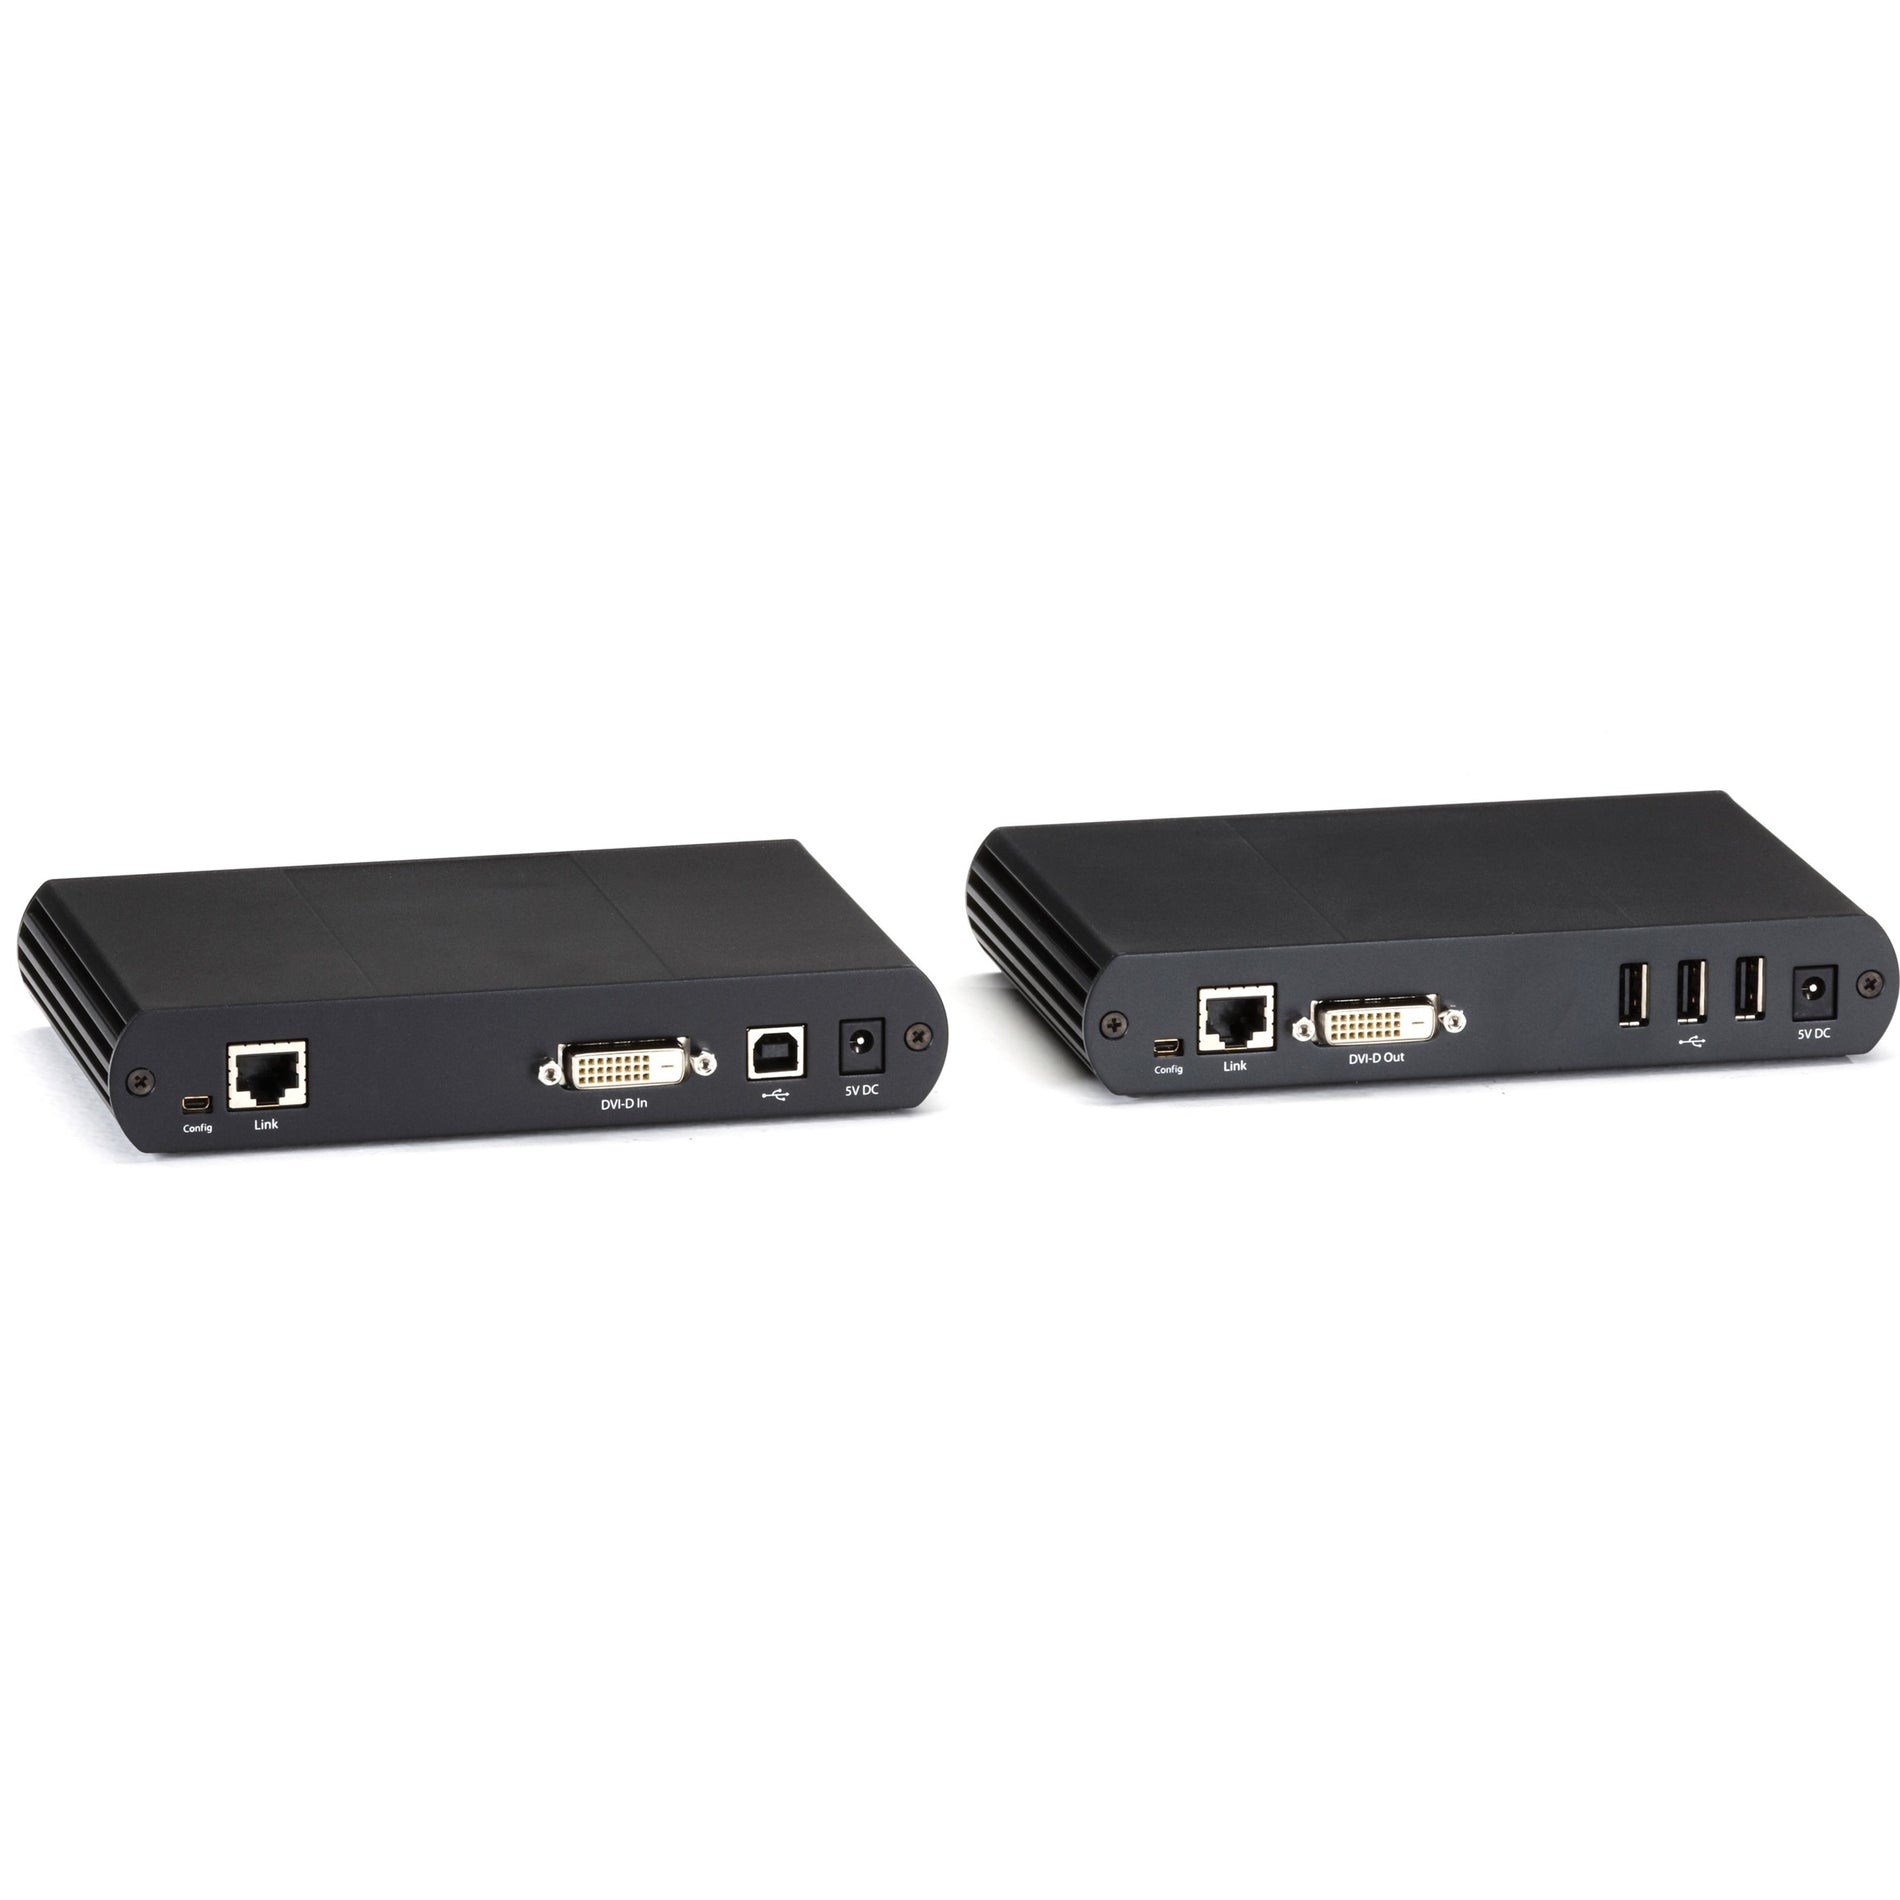 Black Box ACU1500A-R3 KVM Extender - DVI-D USB 2.0 Full HD Resolution 328 ft Range